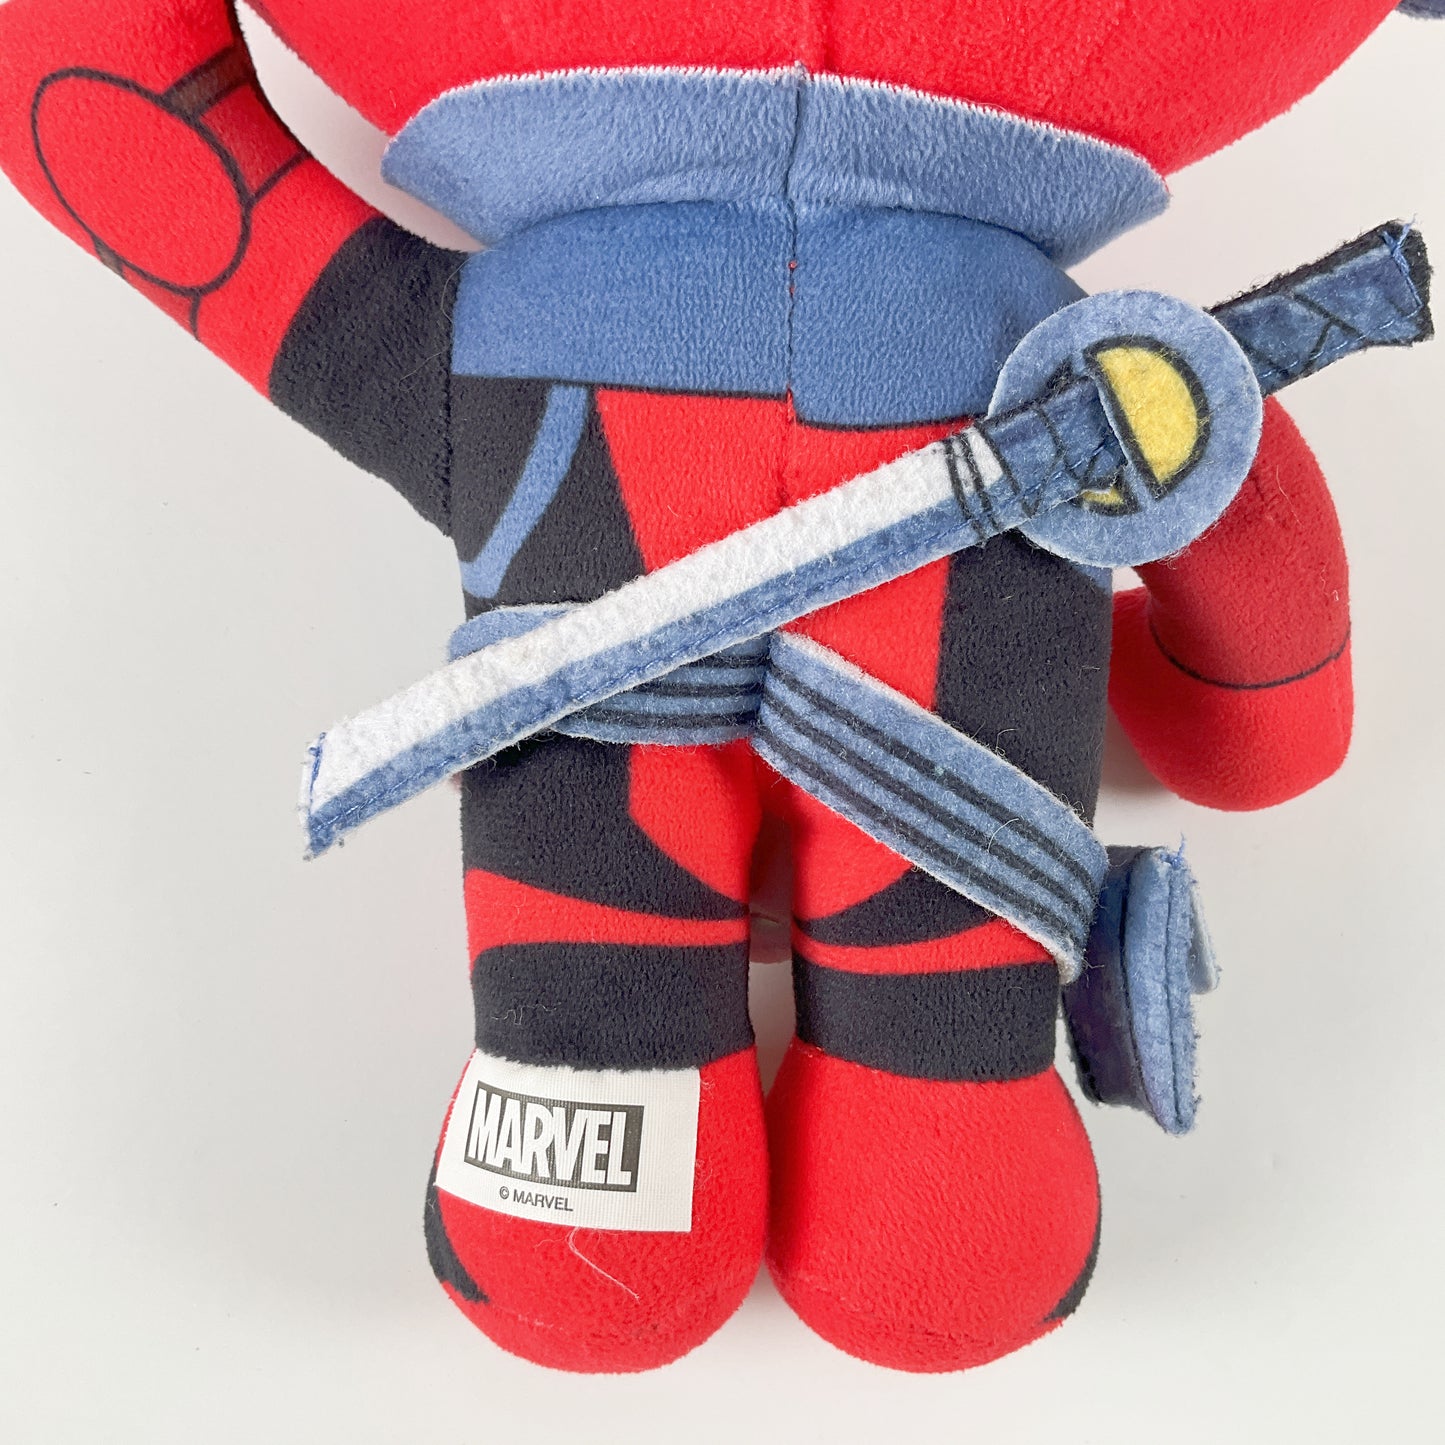 Marvel - Licensed Deadpool Plush Soft Toy